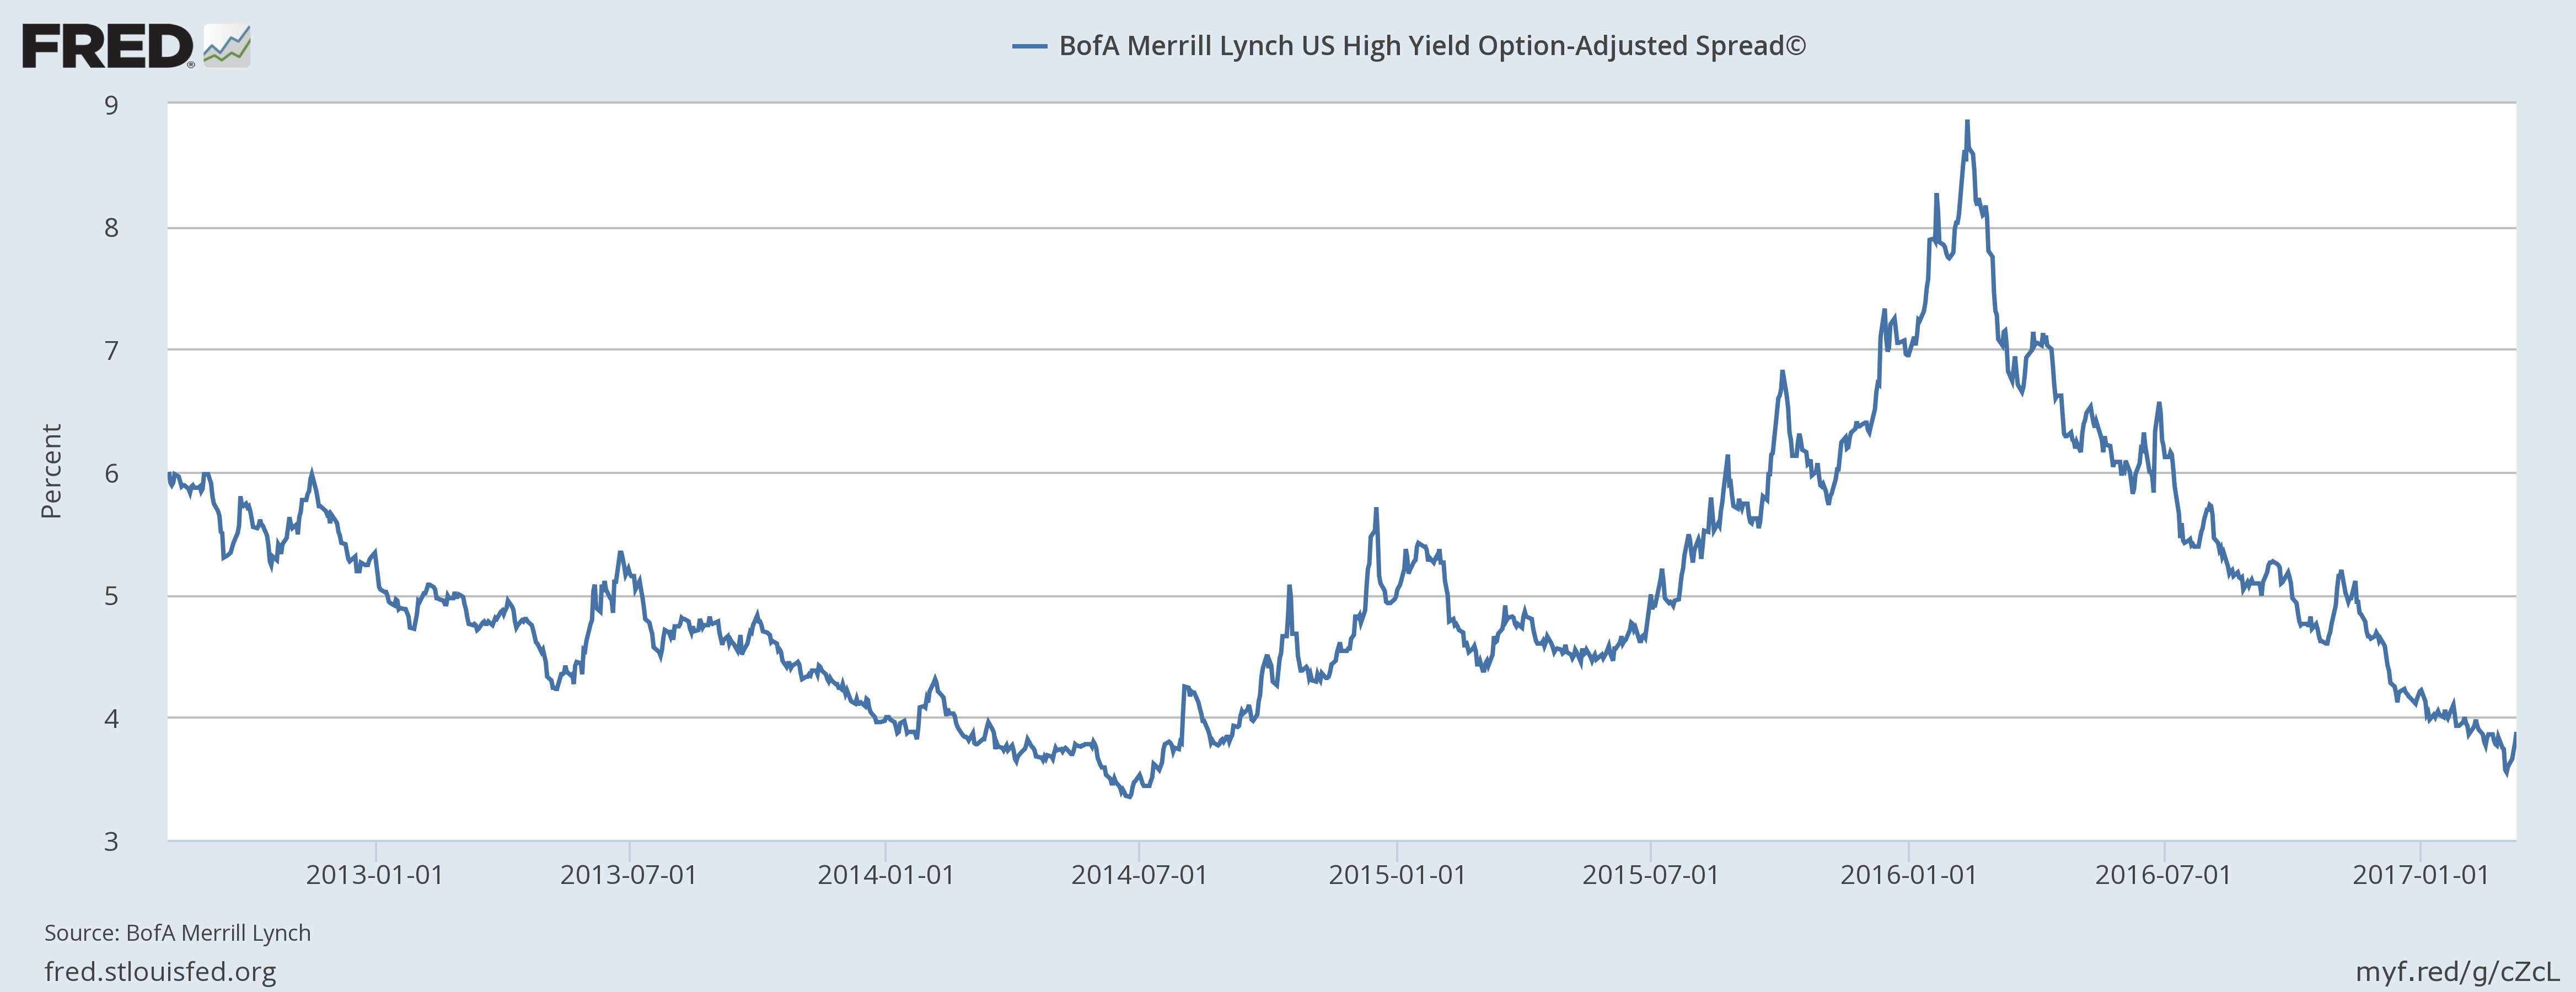 Bofa Merrill Lynch U.S. High Yield